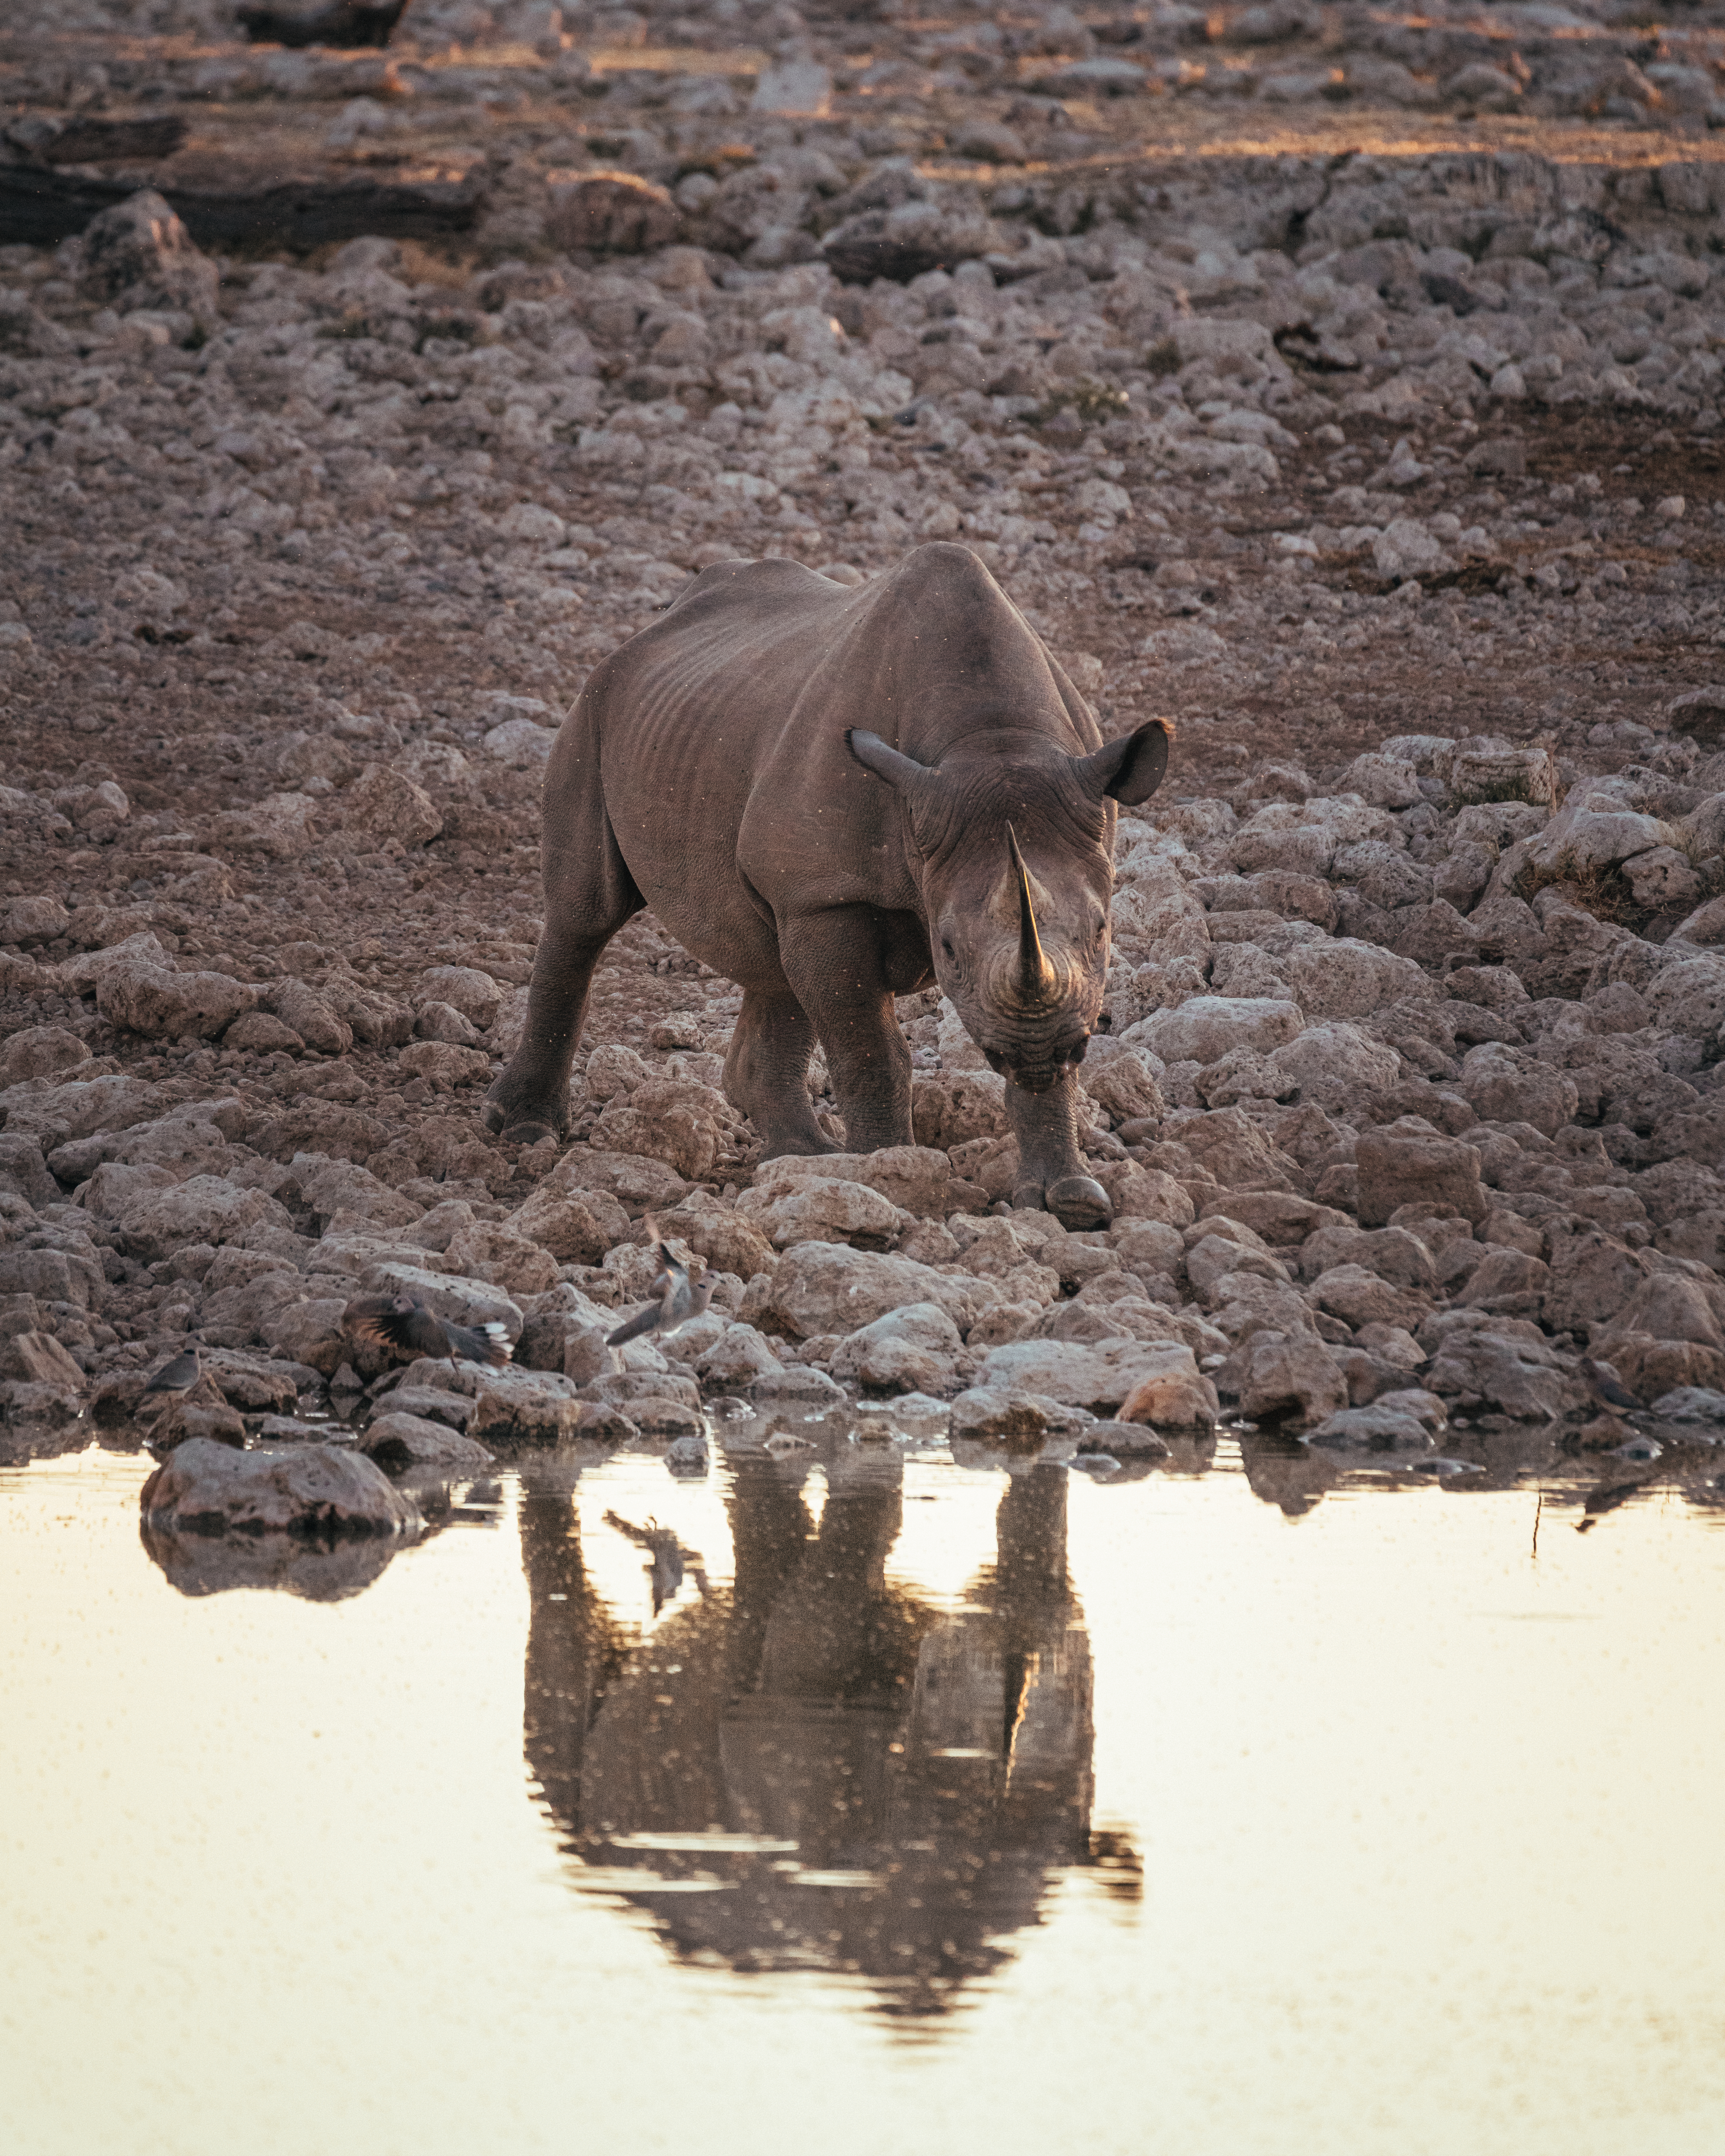 My first rhino in Etosha National Park